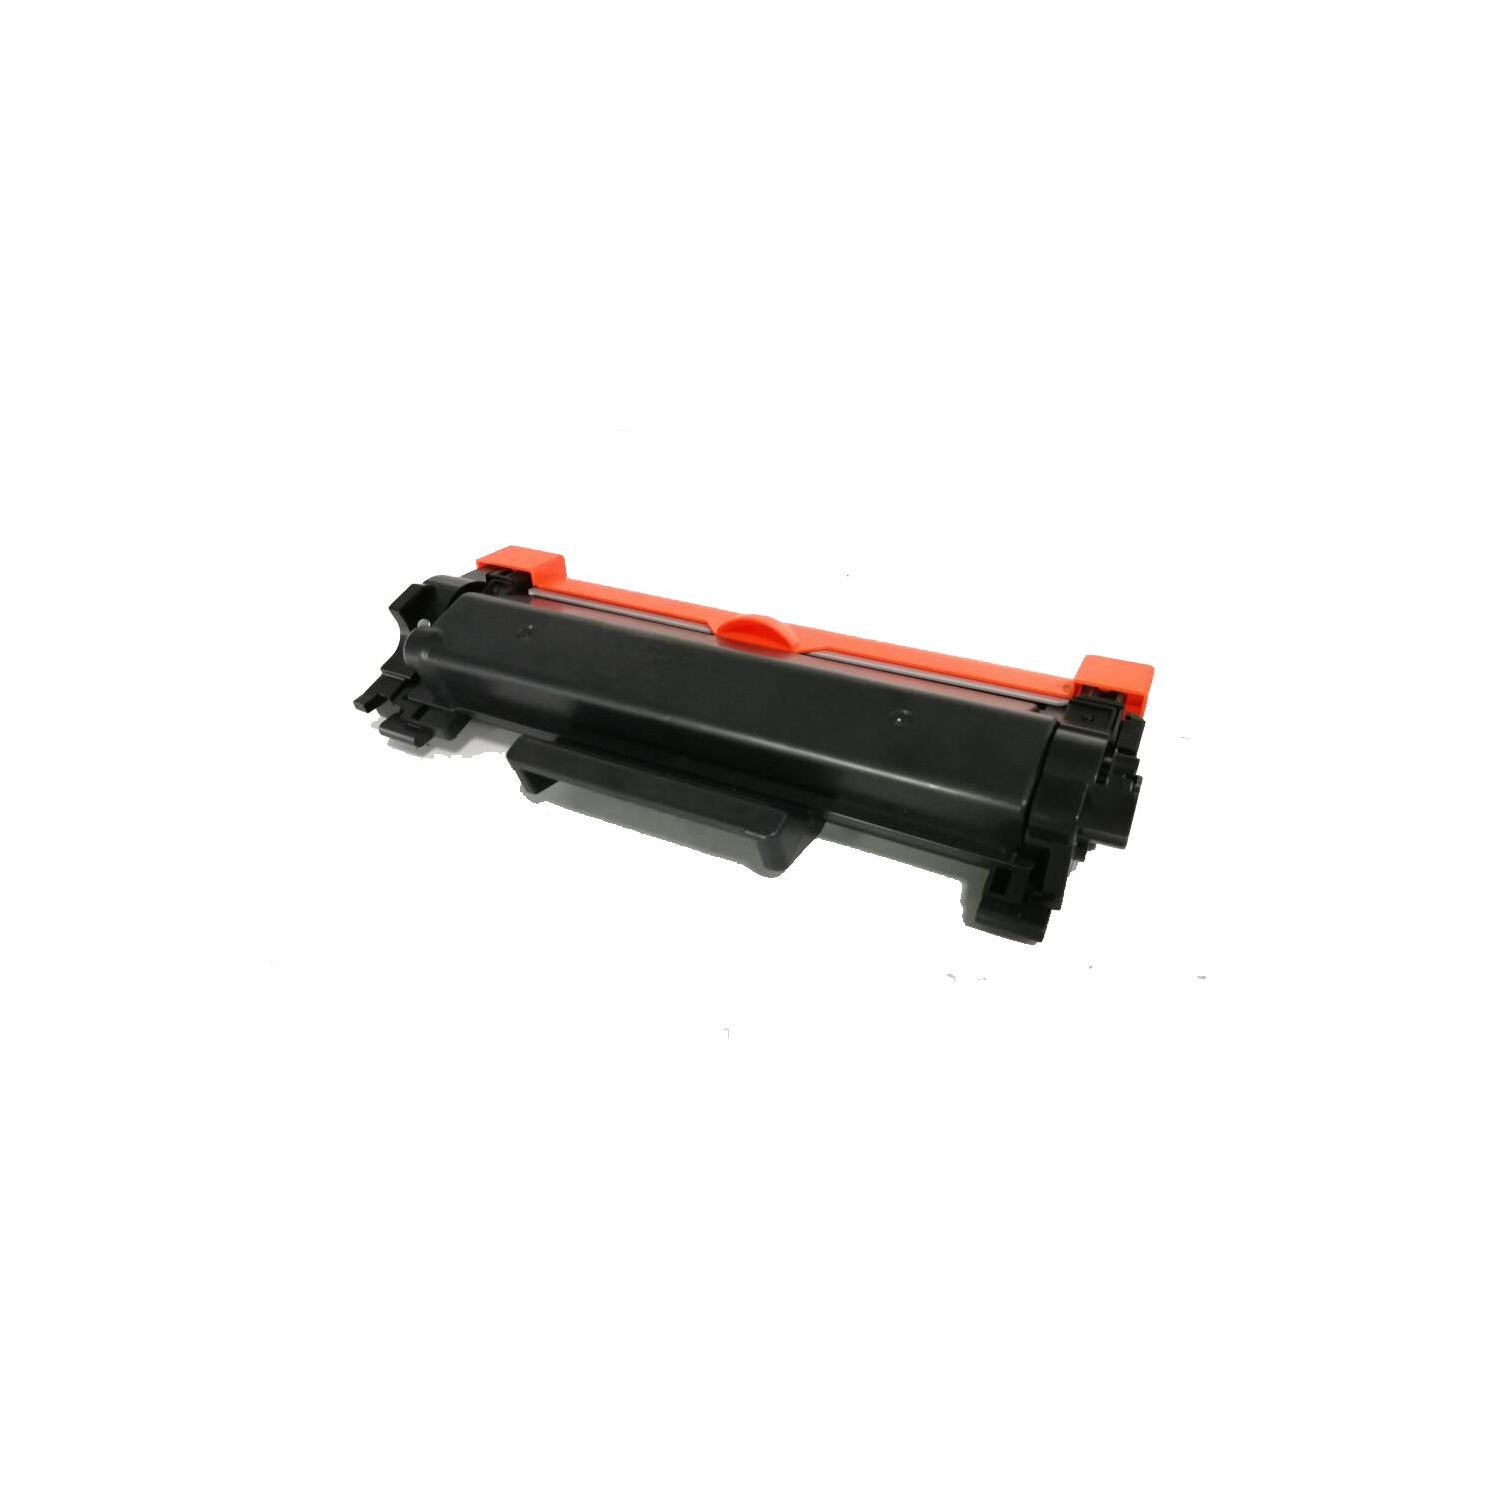 TN760 High Yield Toner Cartridge For Brother Printer DCP-L2550 HL-L2350 MFC-L2710 HL-L2370DW HL-L2390DW MFC-L2710DW MFC-L2730 TN730